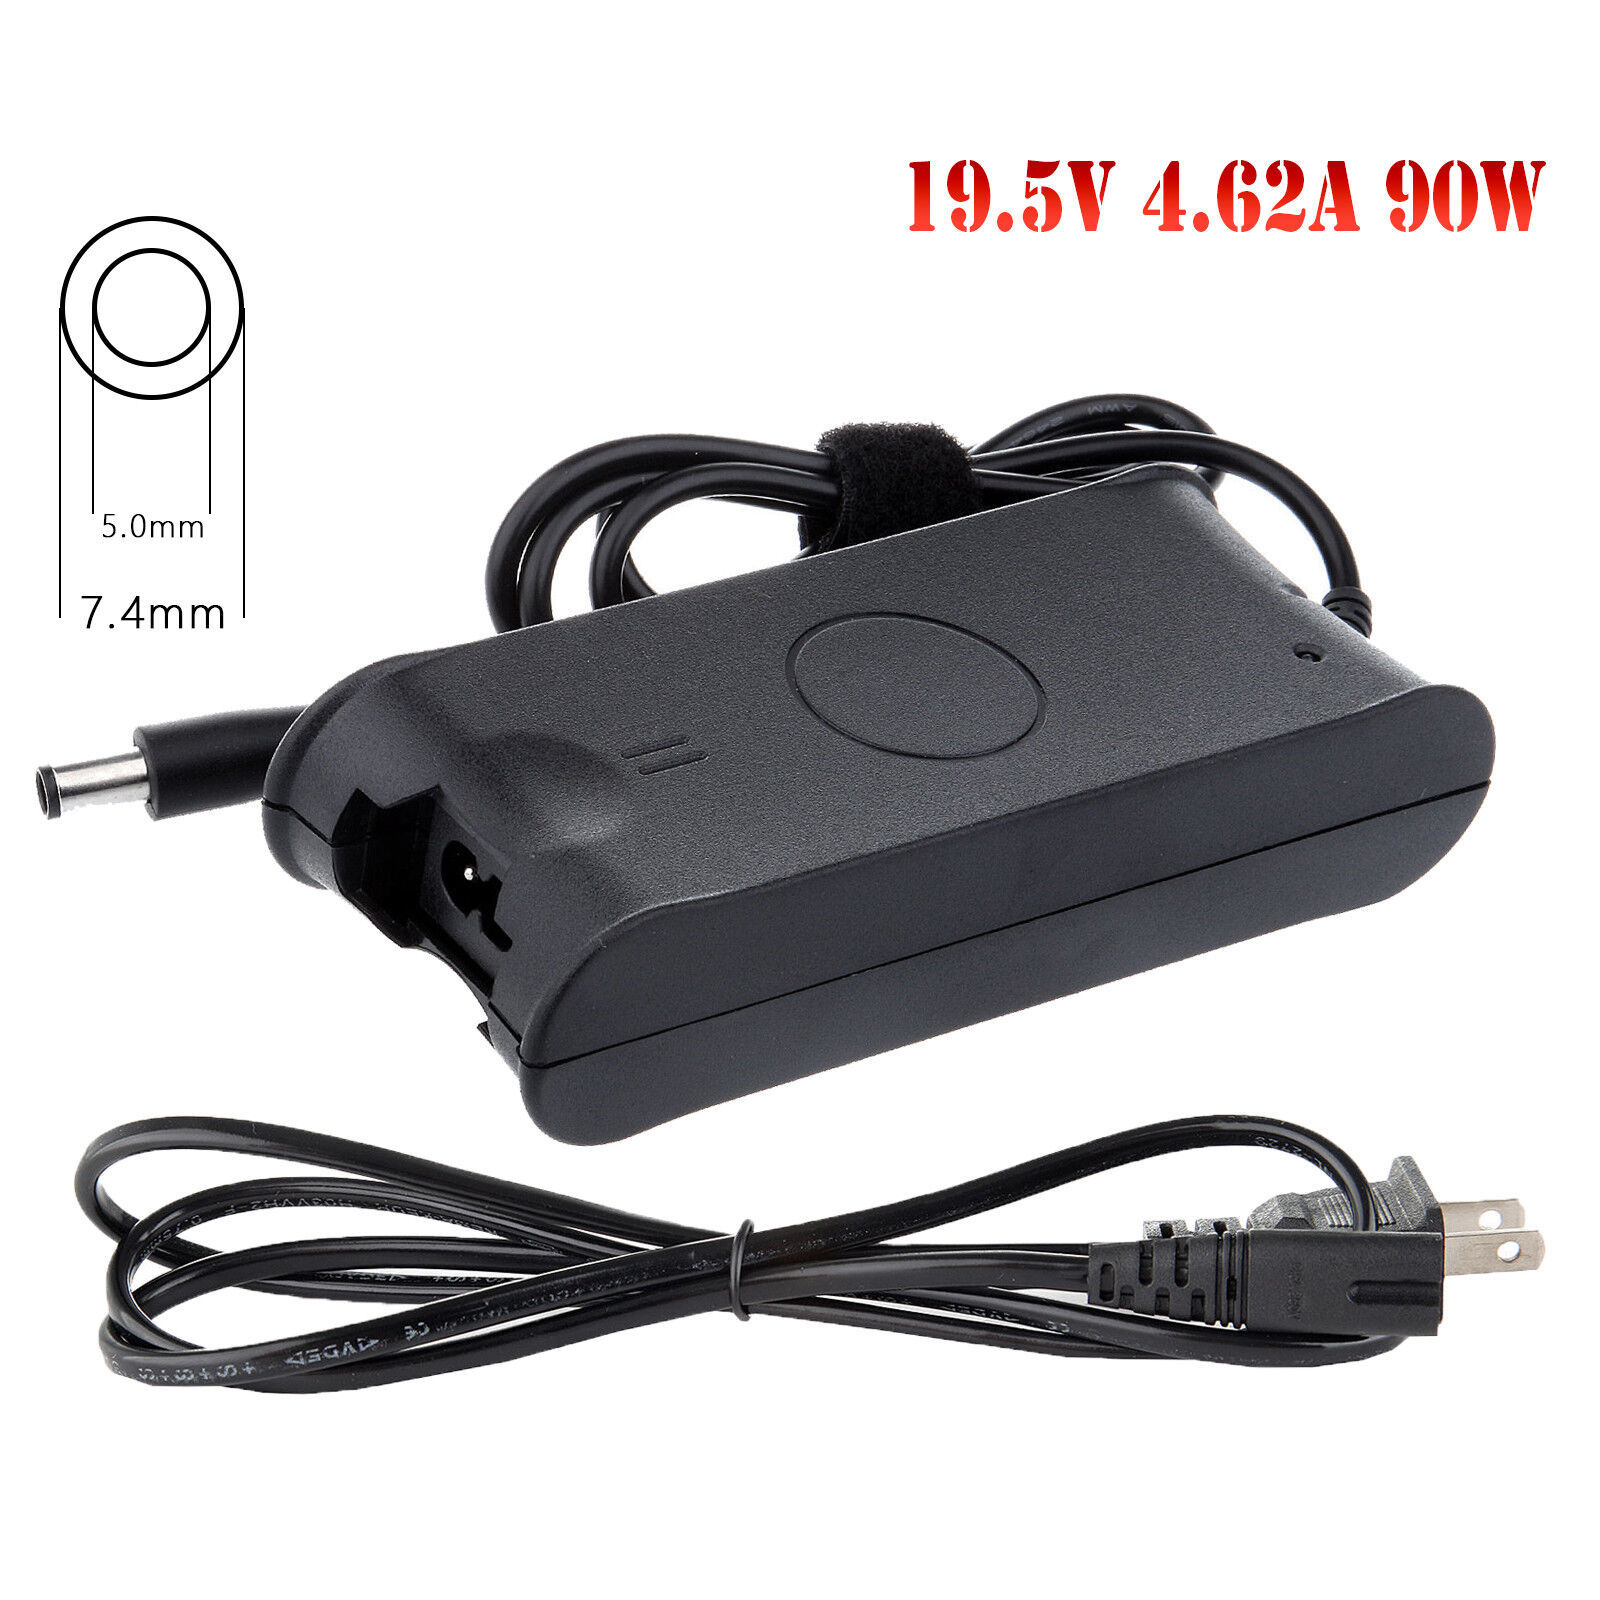 Primary image for Ac Adapter Charger Power Supply Cord For Dell Latitude E5530 E6220 E6230 E5500